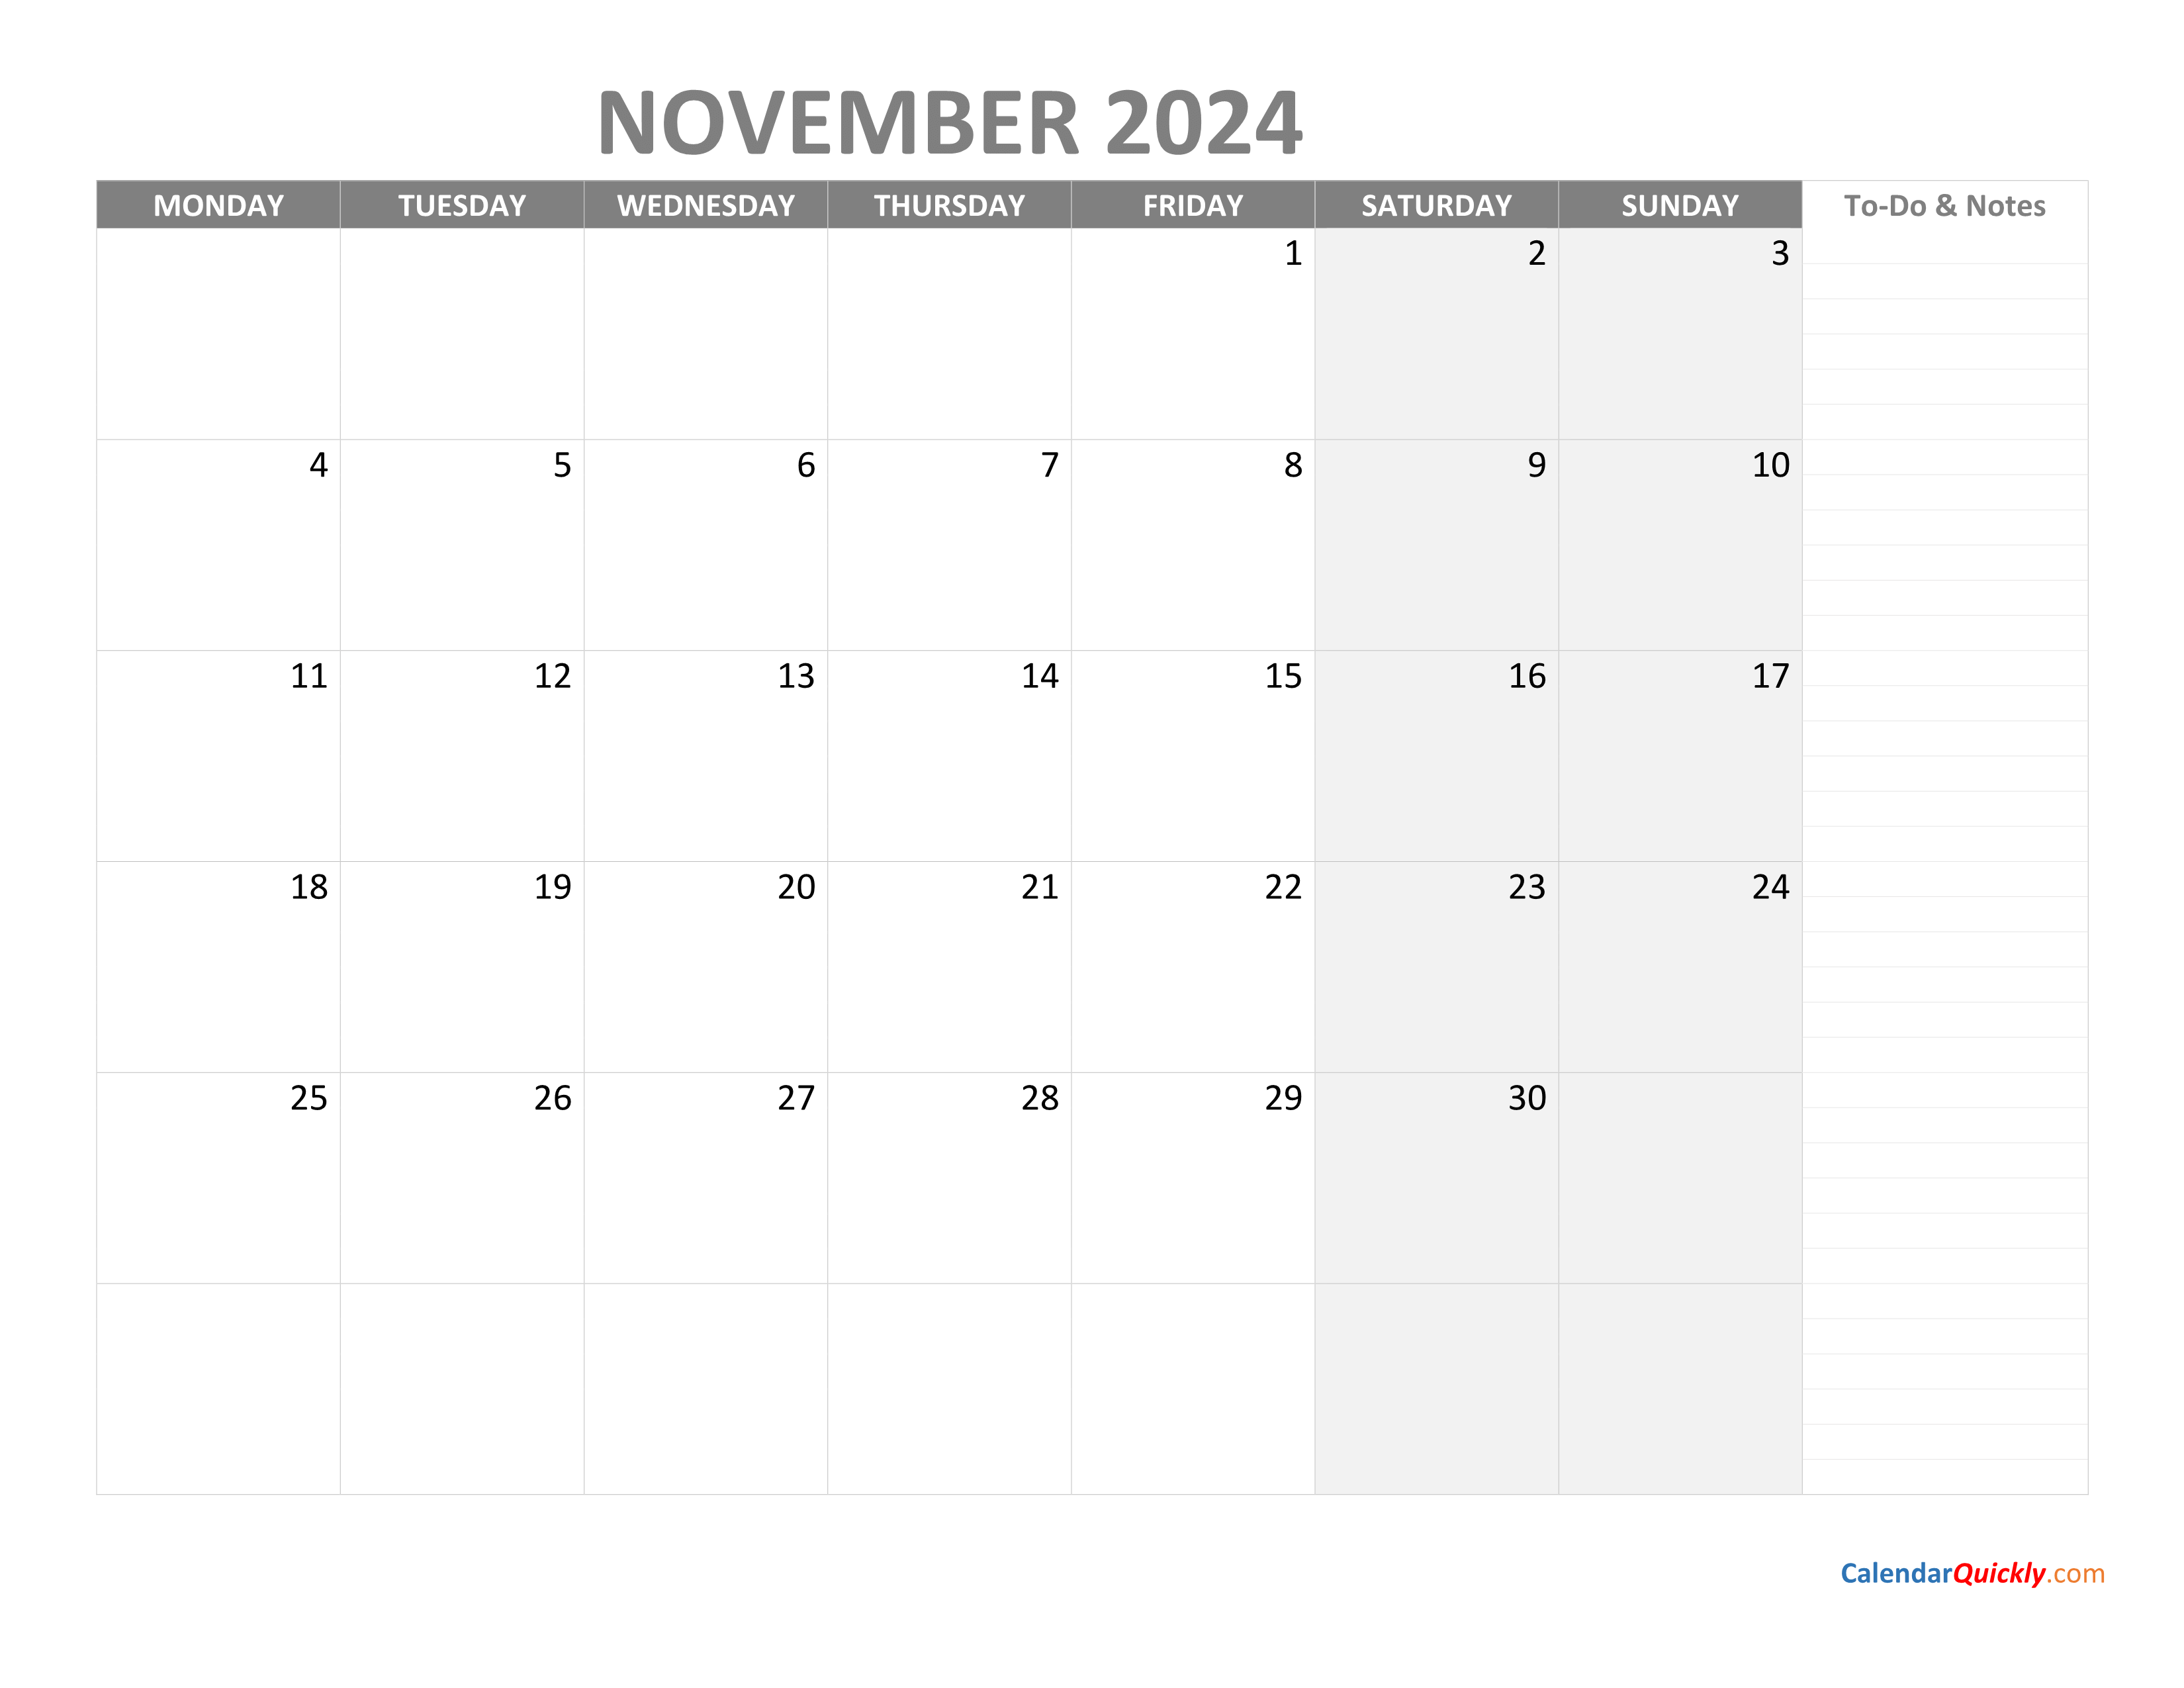 Monthly 2024 Calendar Calendar Quickly Gambaran - Free Printable 2024 Calendar Monday To Sunday